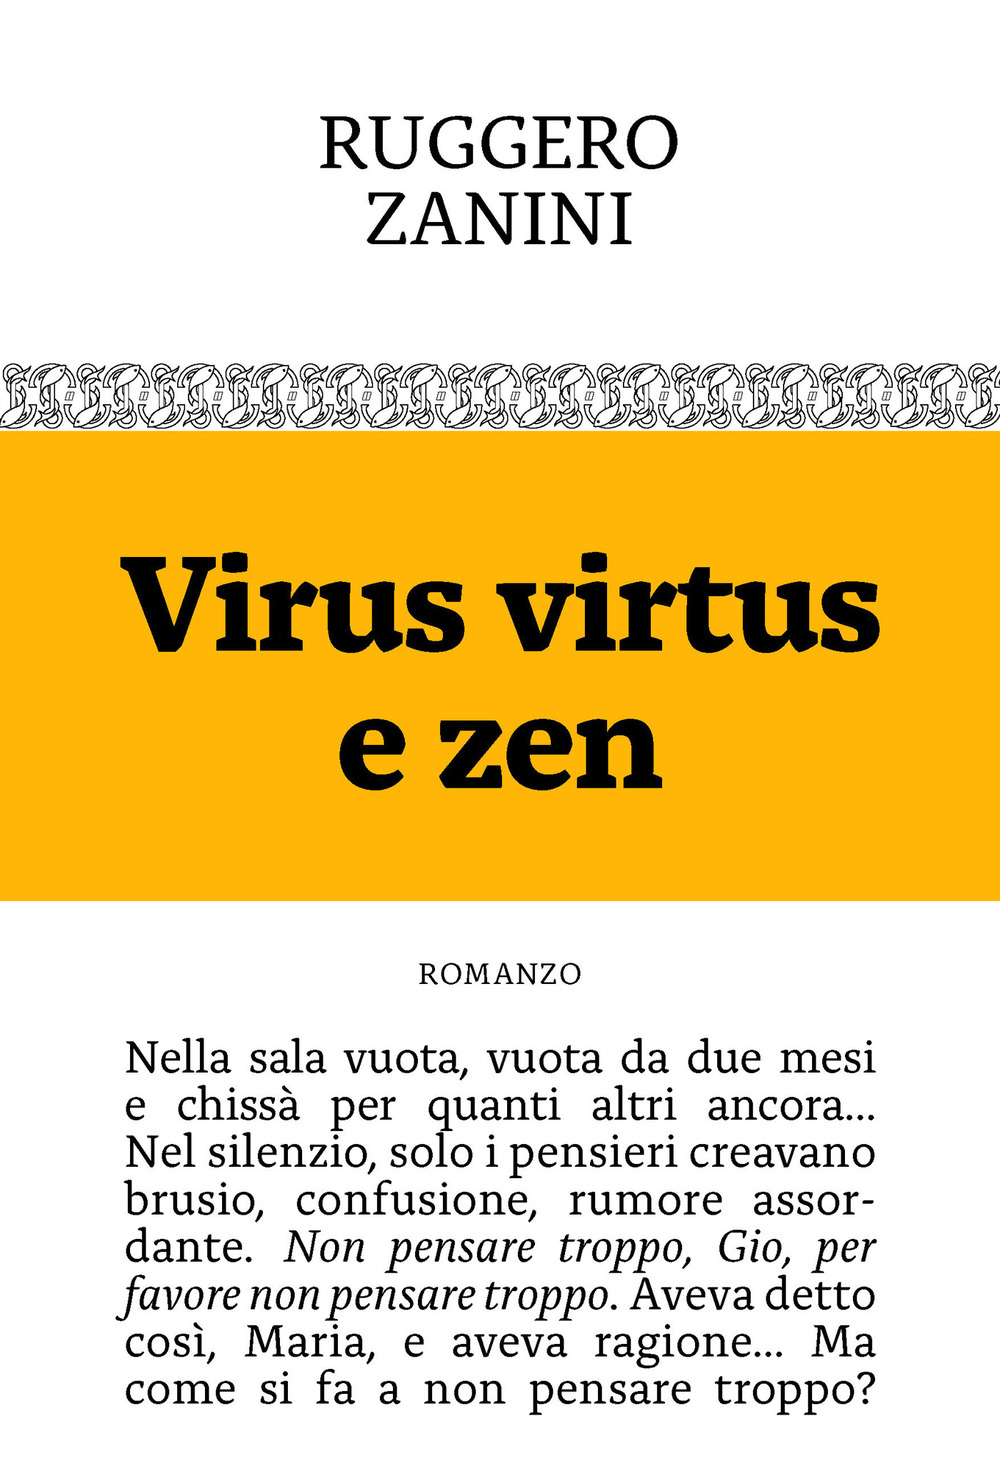 Virus virtus e zen